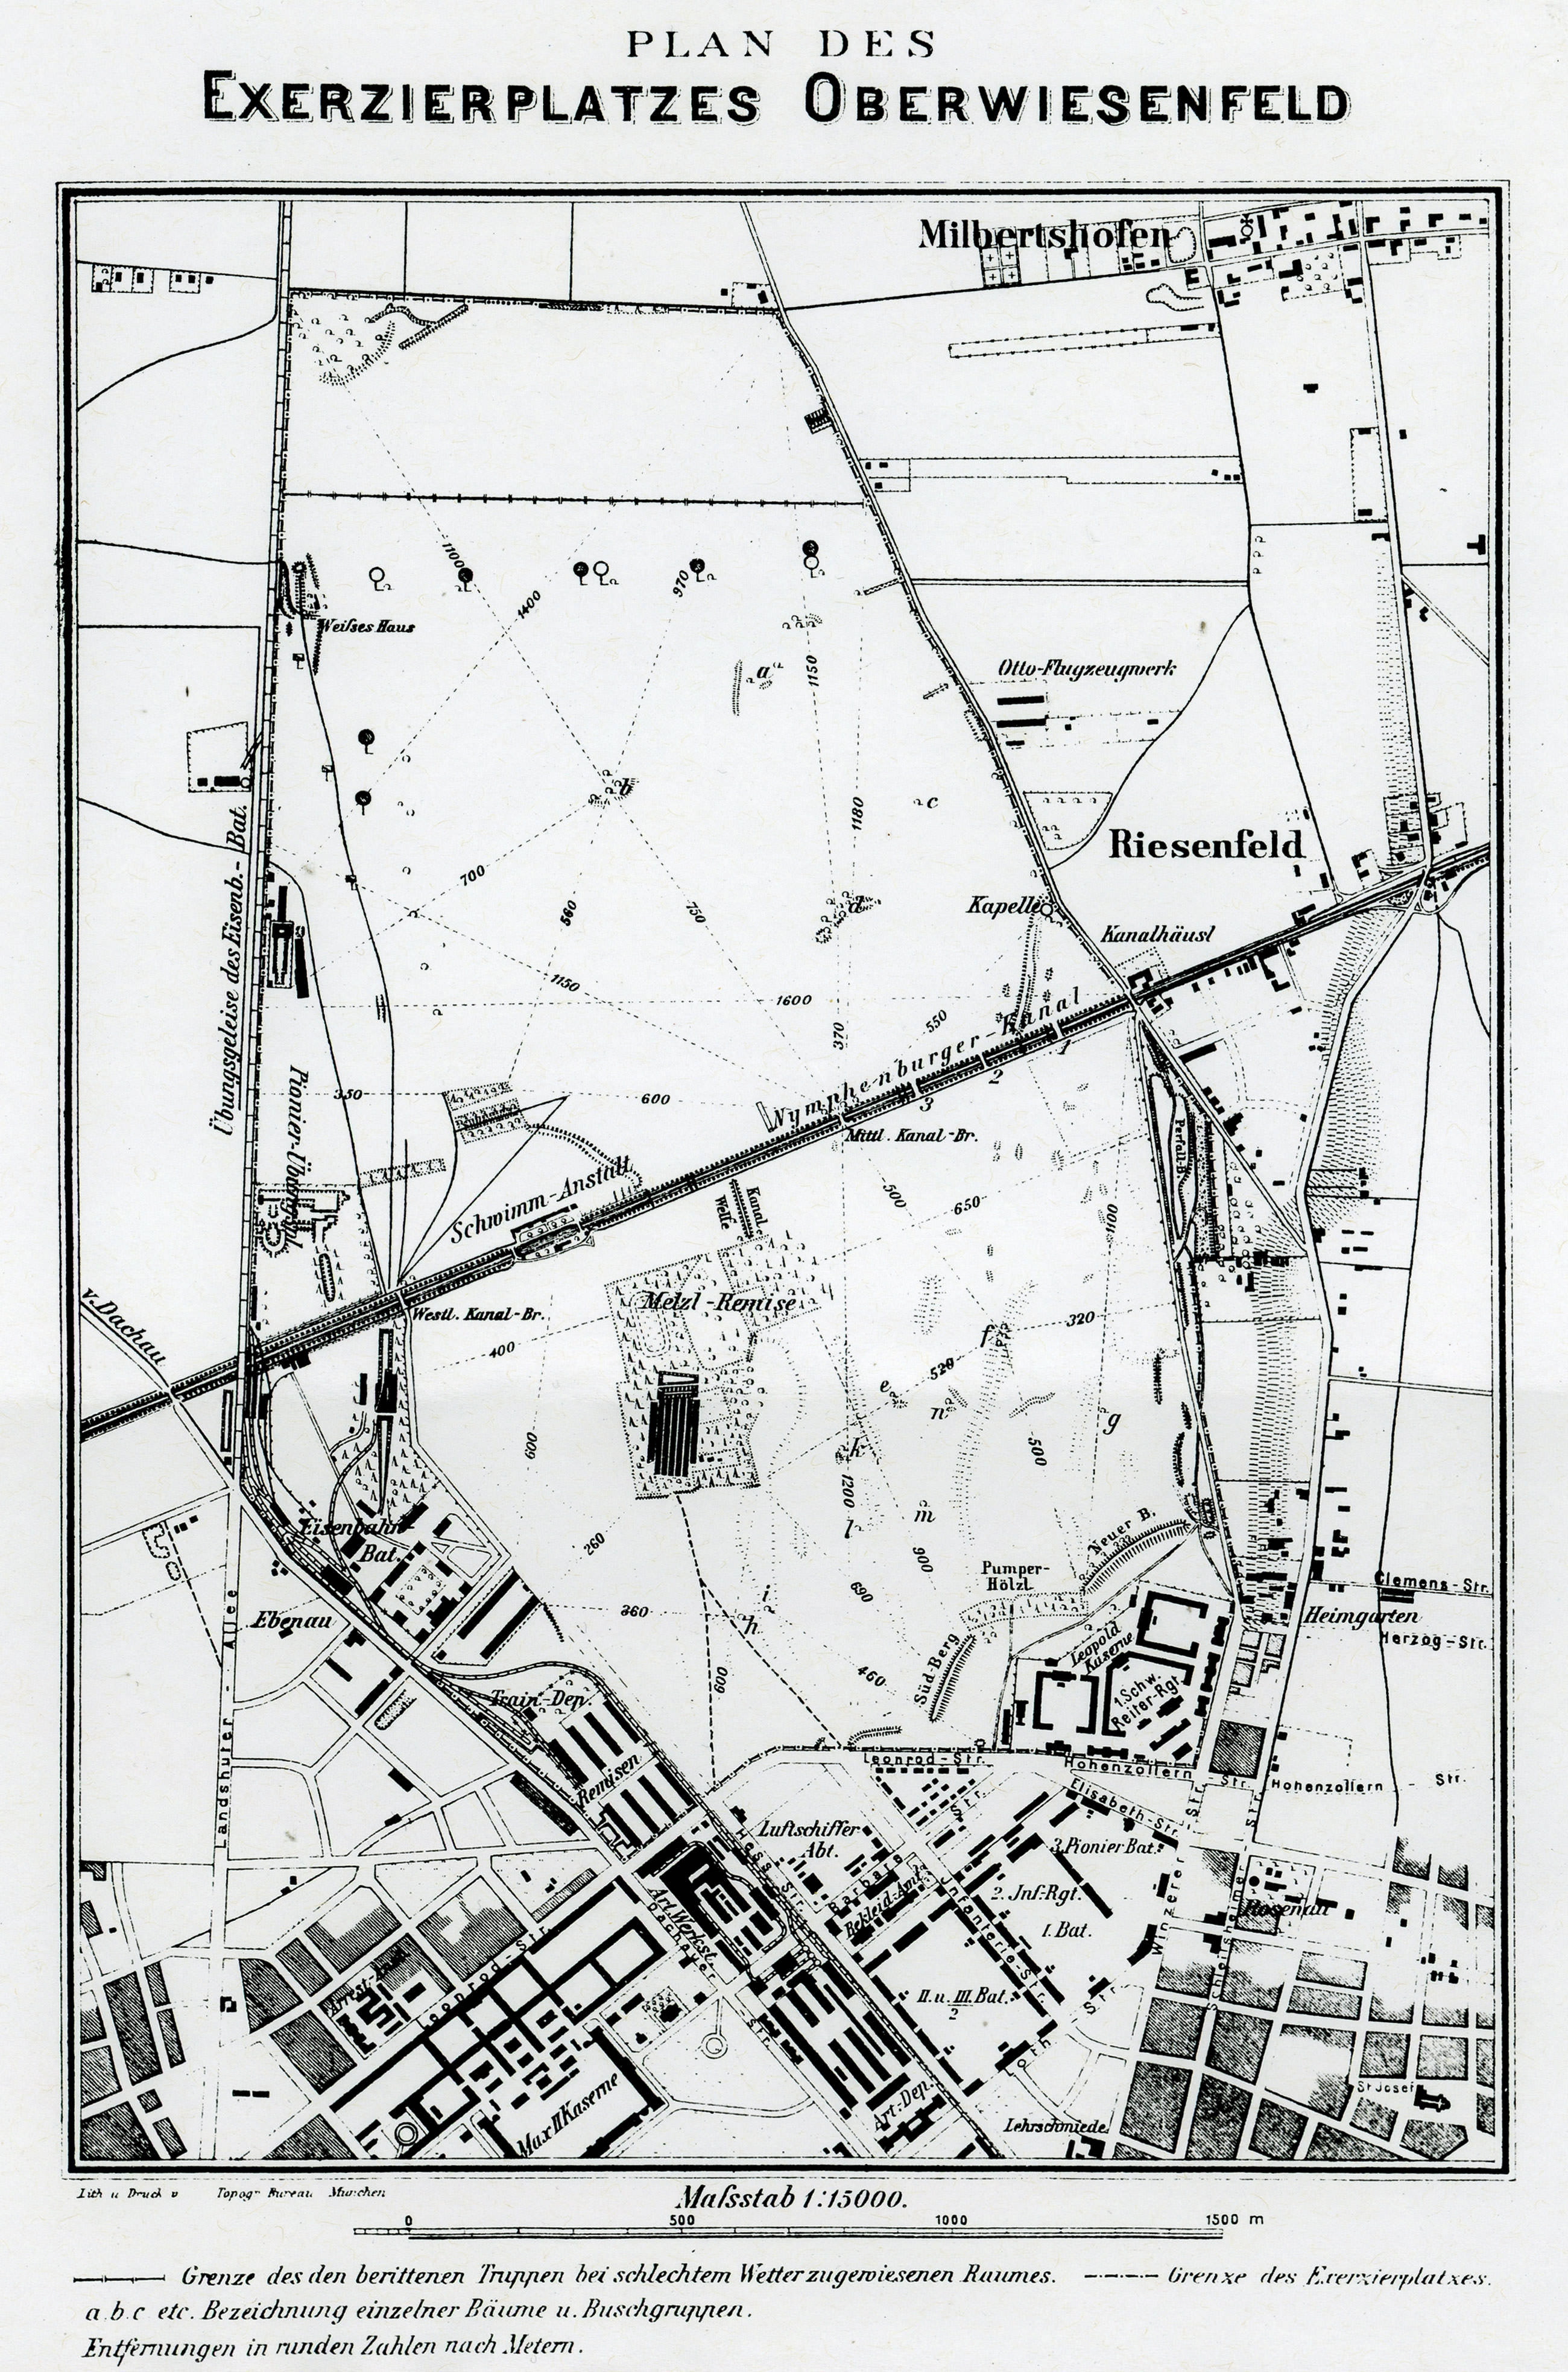 Plan des Exerzierplatzes Oberwiesenfeld